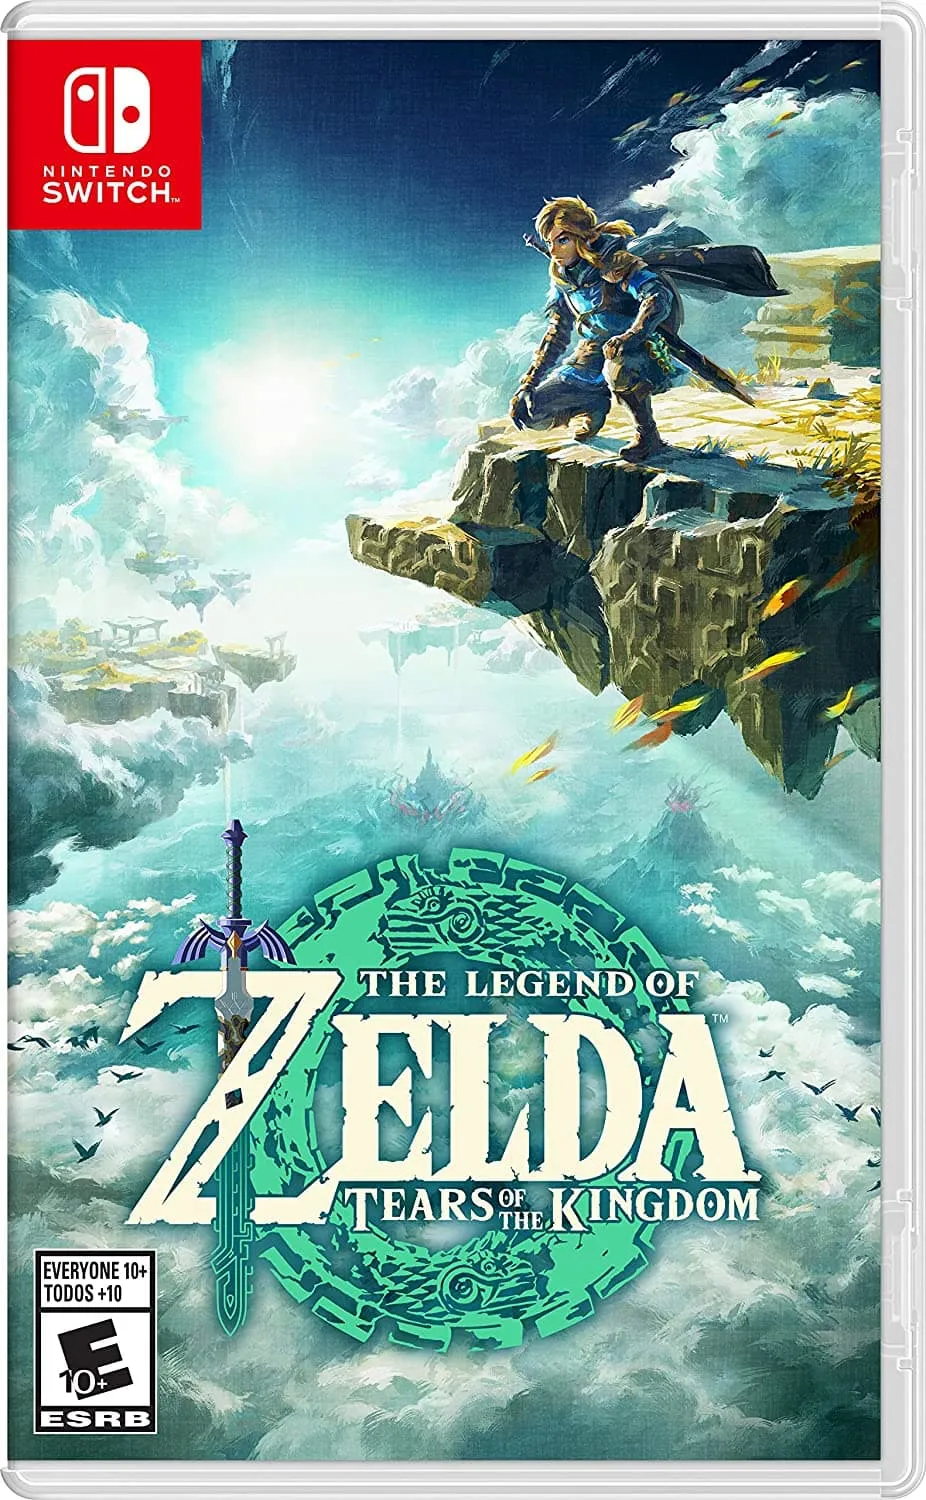 Illustration de The Legend of Zelda : Tears of the Kingdom sur Nintendo Switch.